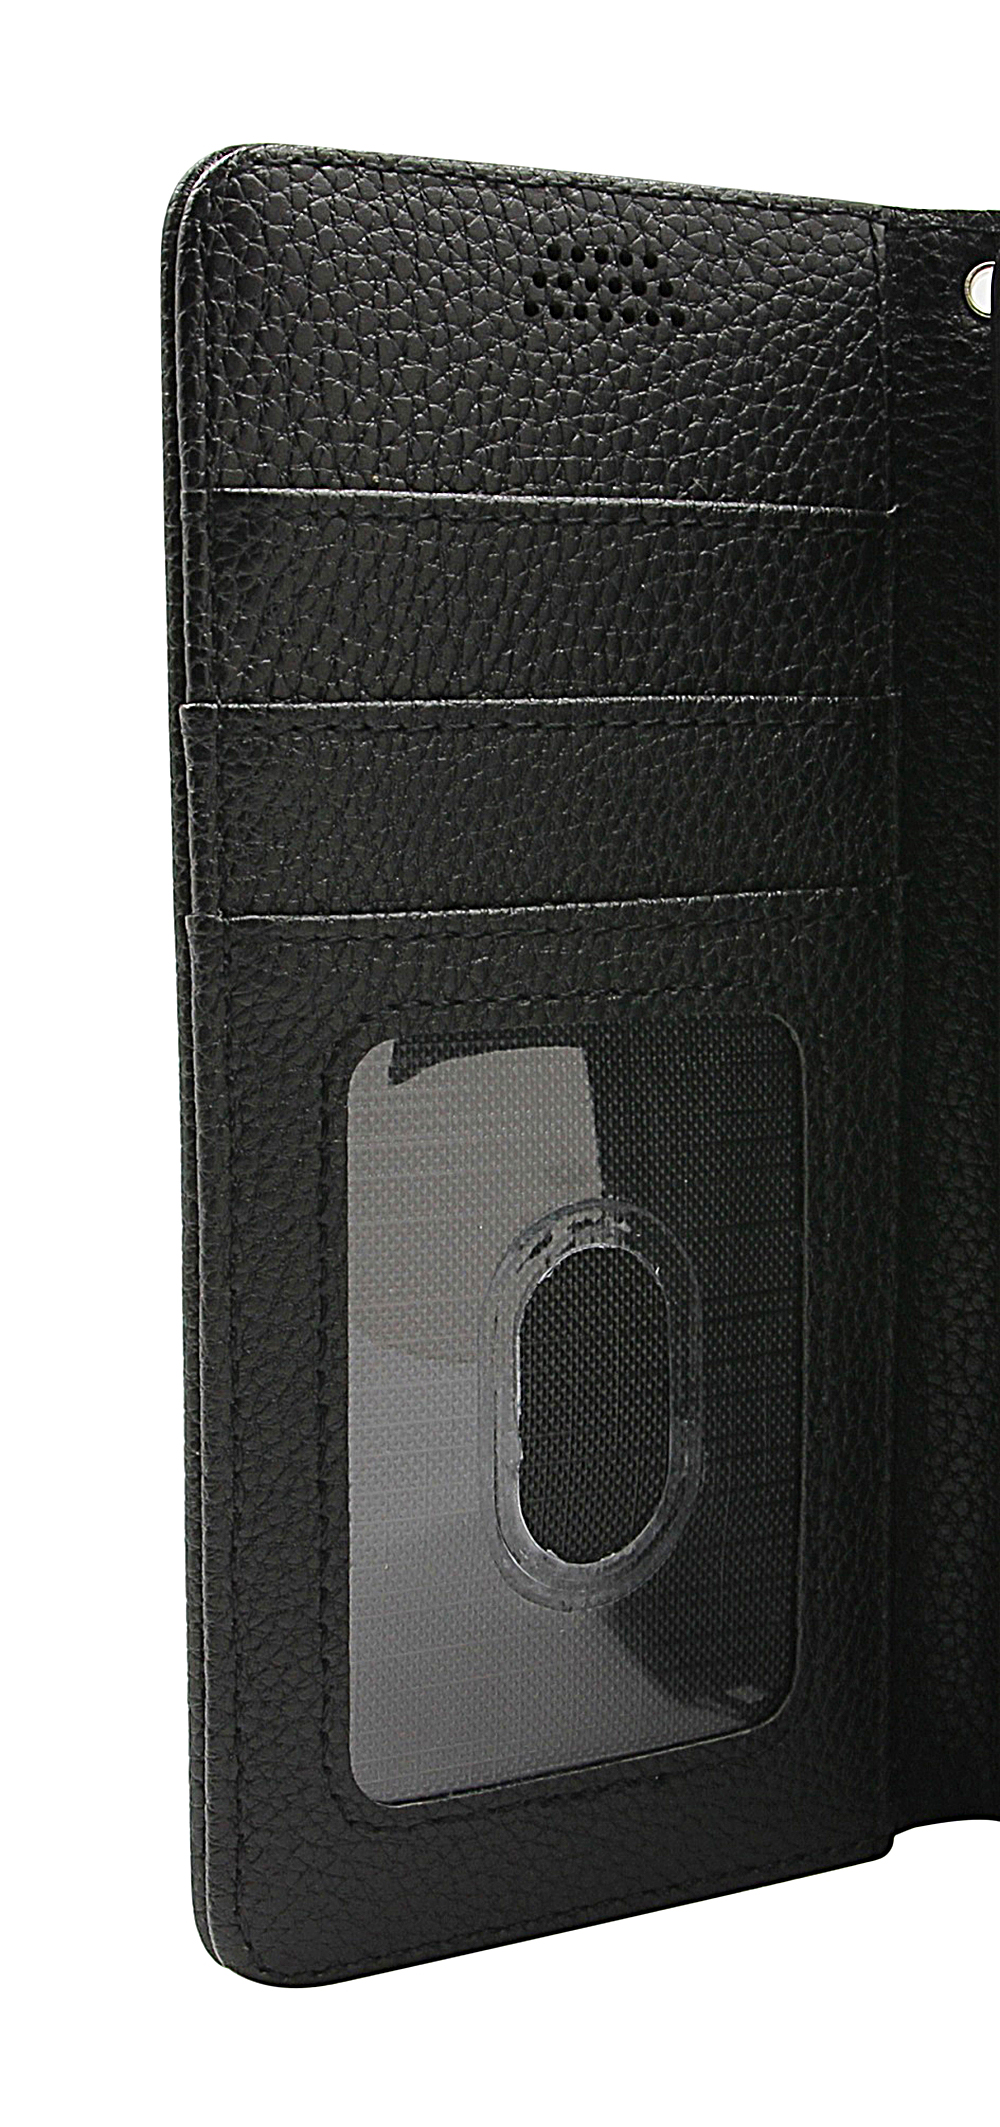 New Standcase Wallet Samsung Galaxy Note 10 Lite (N770F)